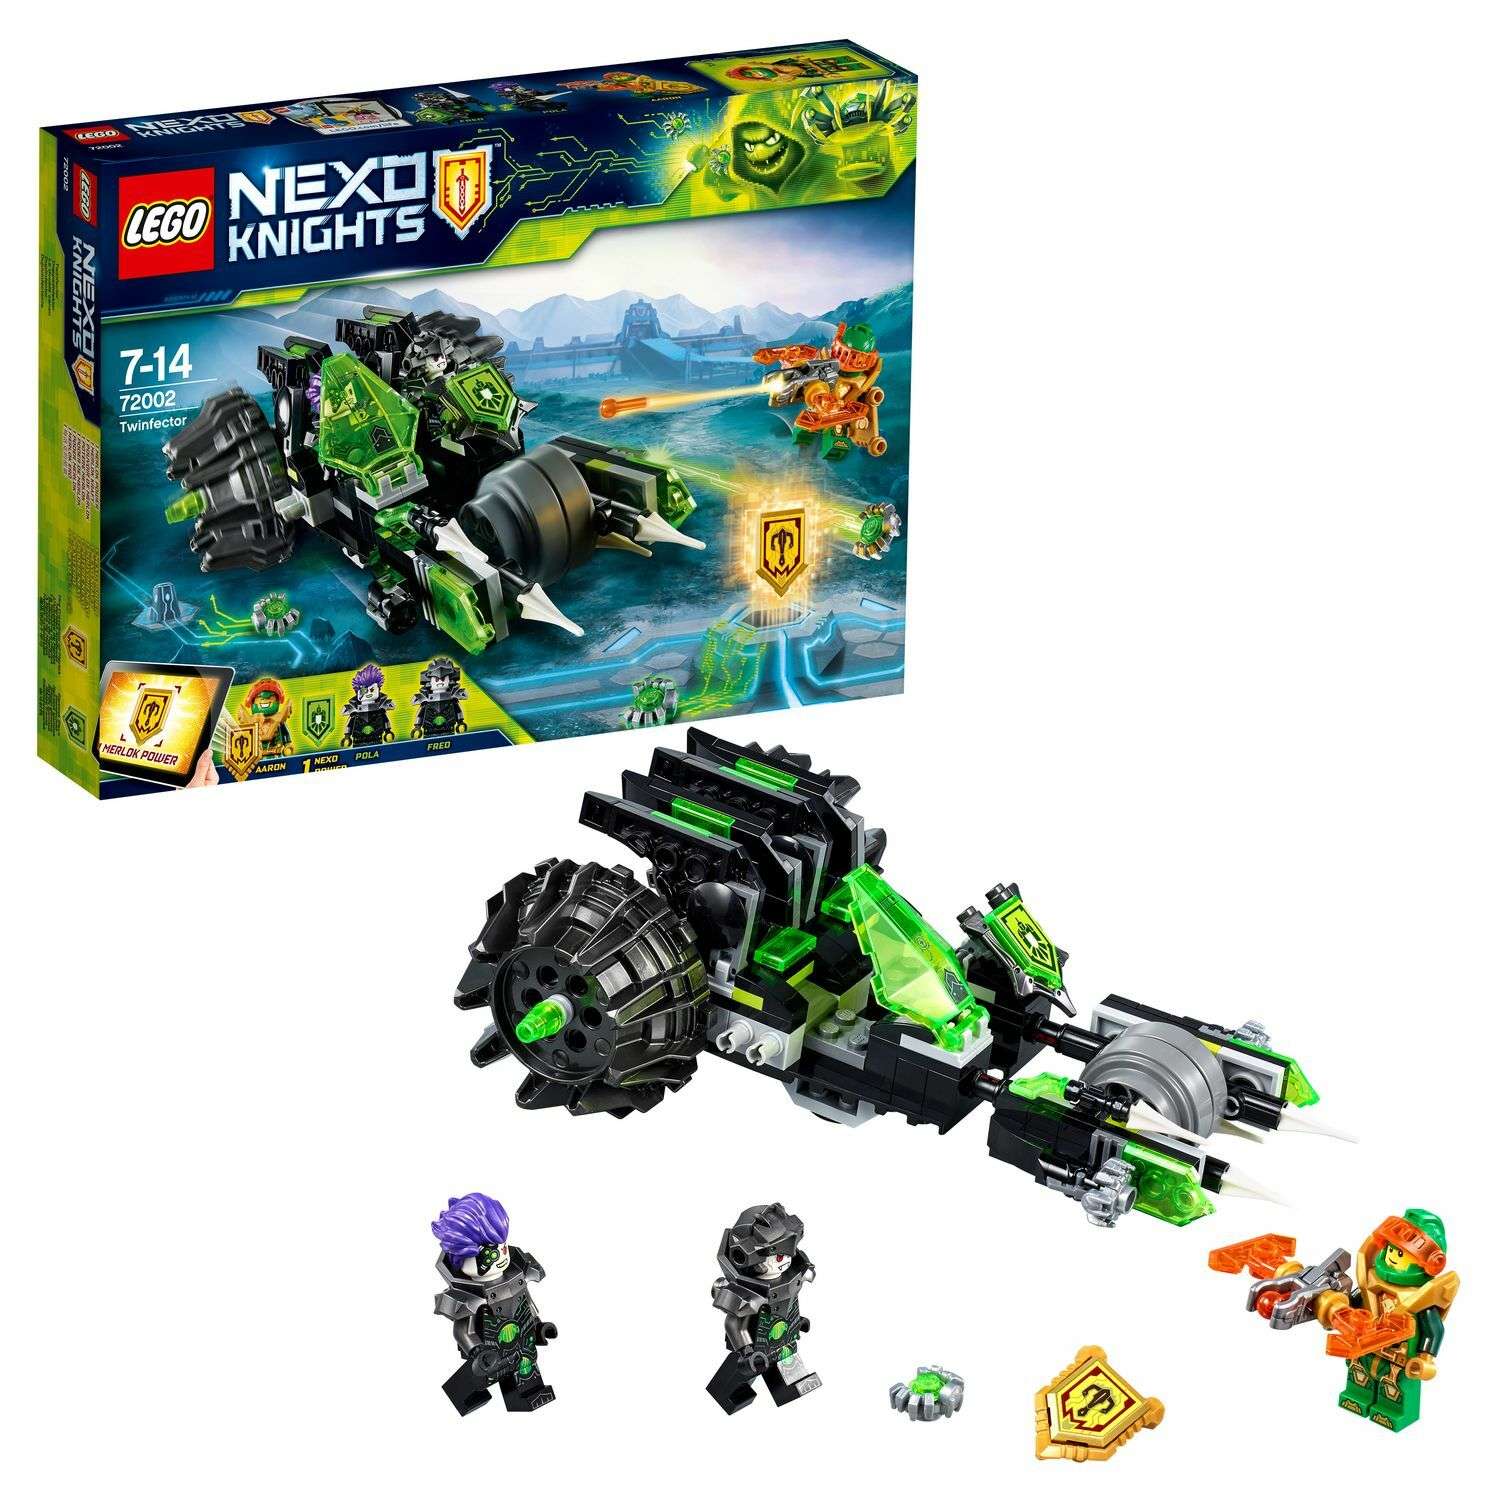 Конструктор LEGO Боевая машина близнецов Nexo Knights (72002) - фото 1